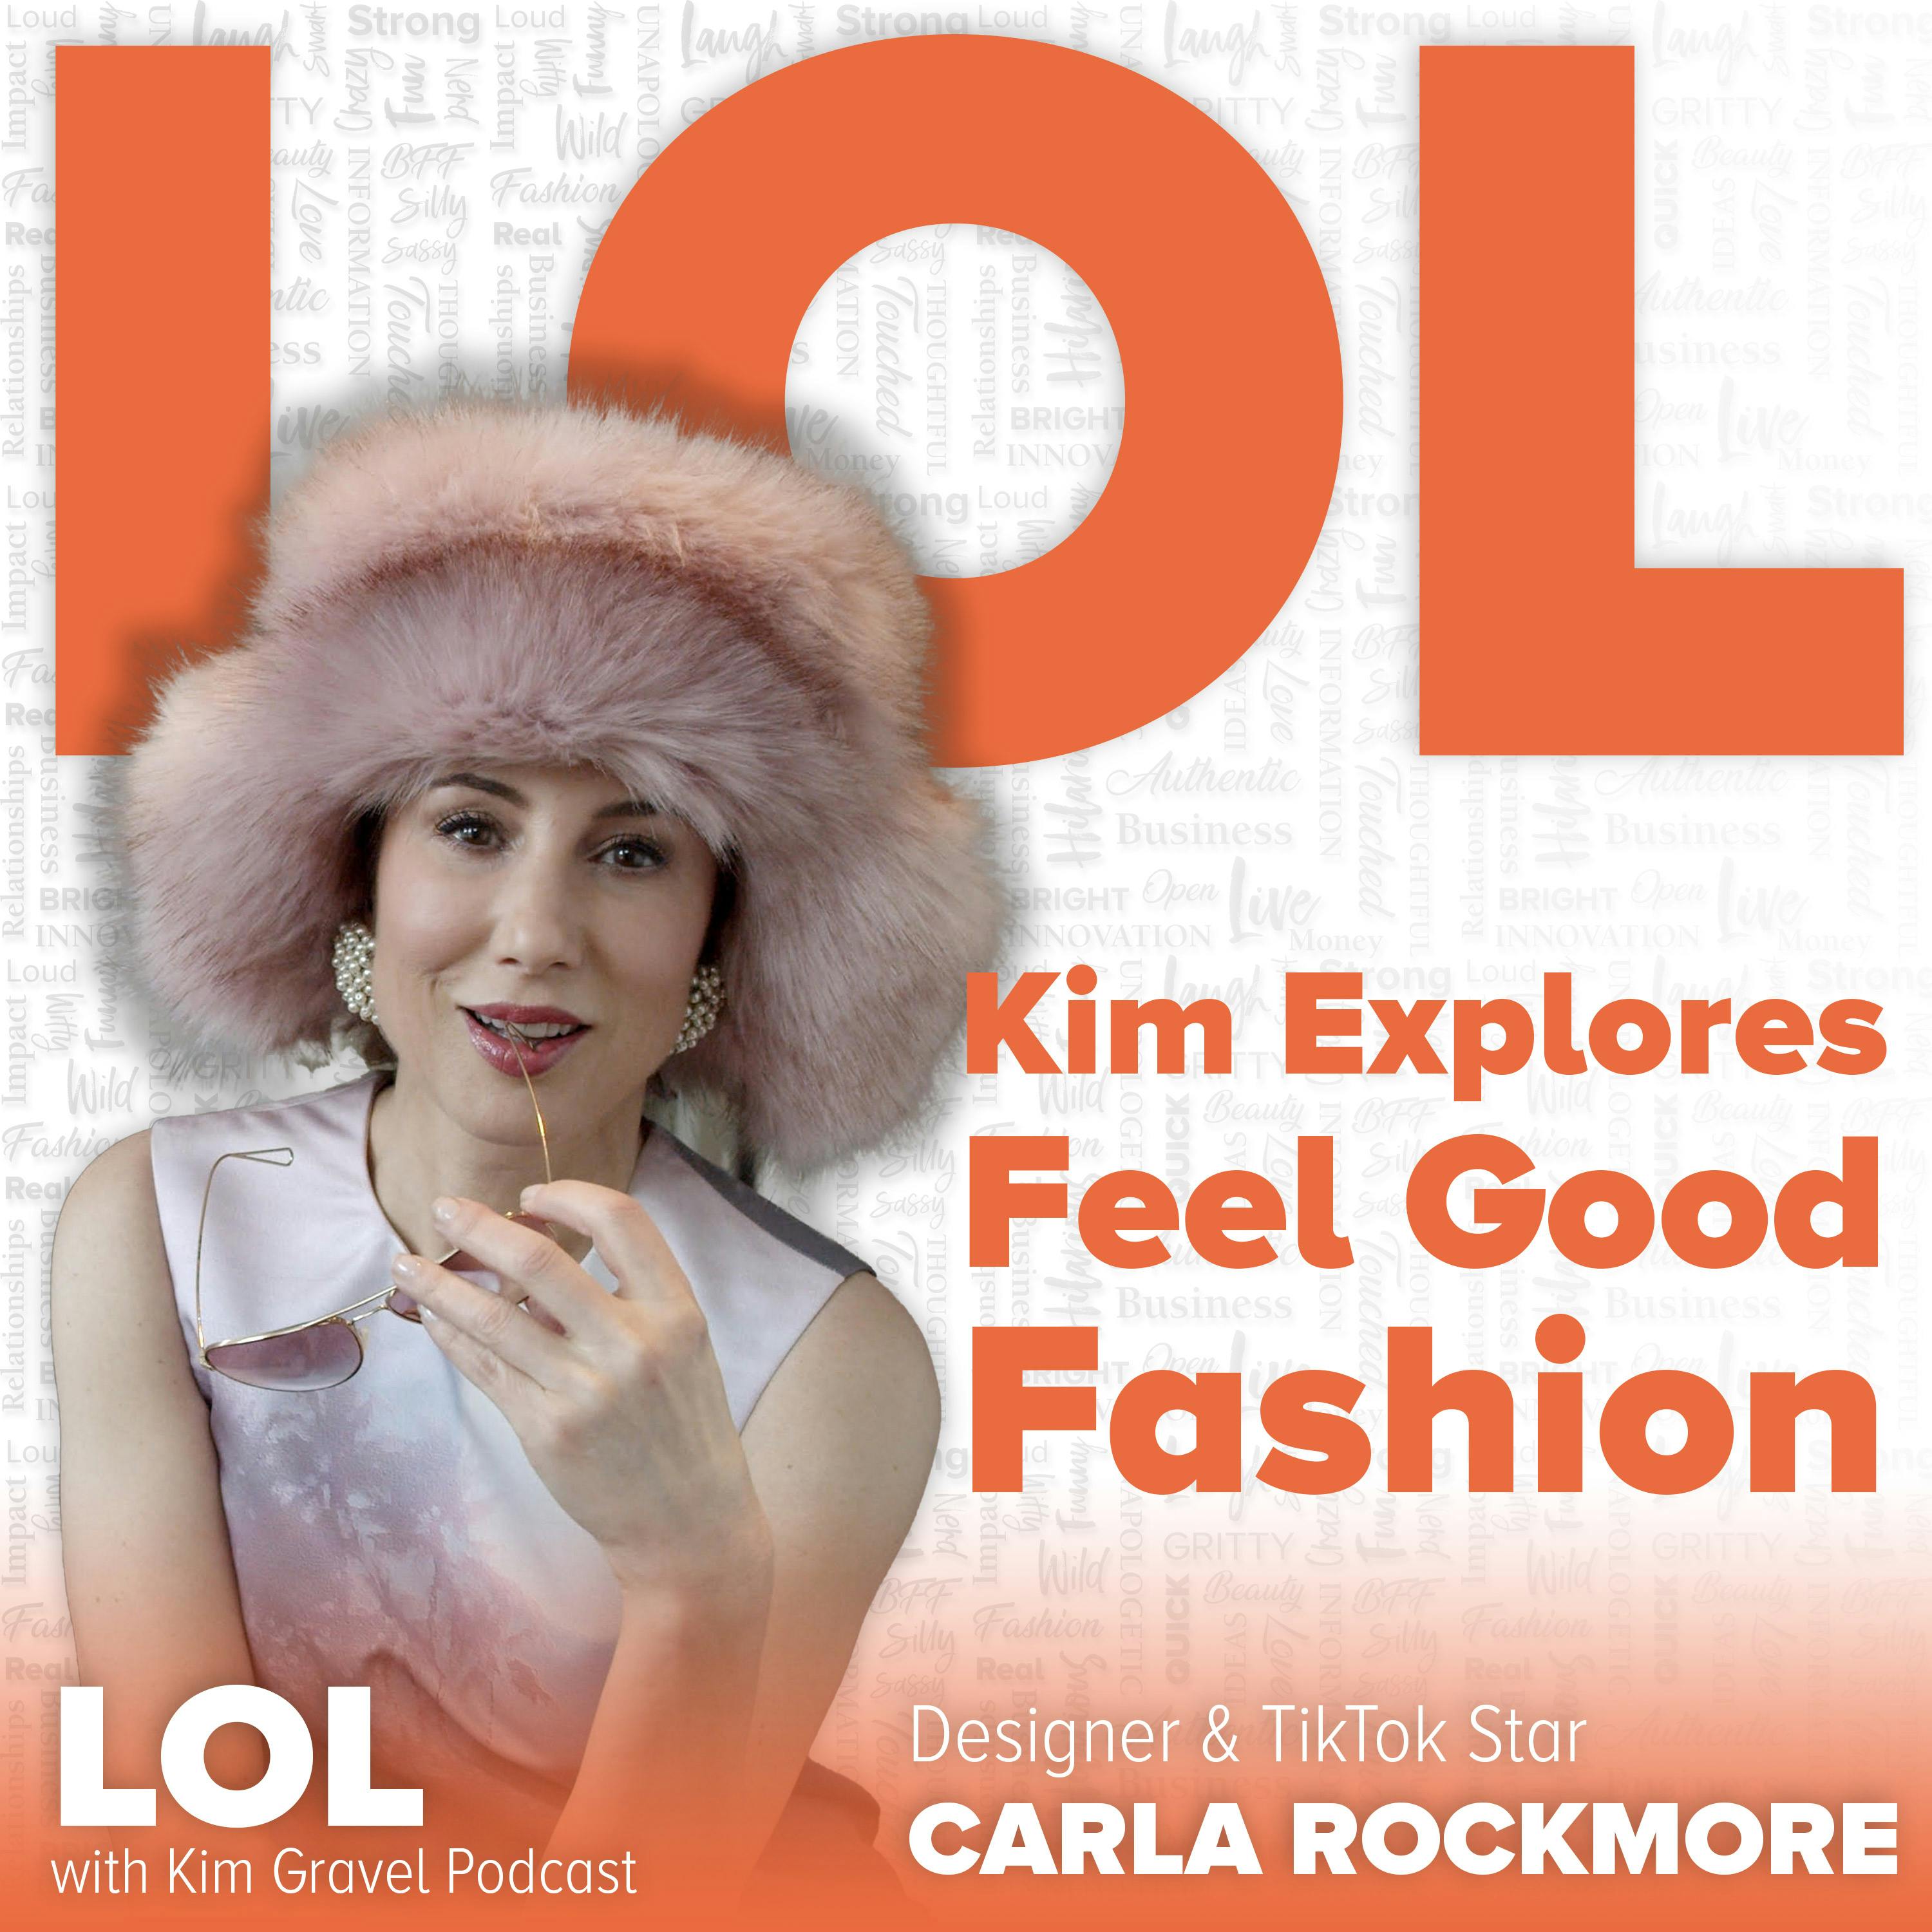 Kim Explores Feel Good Fashion with Carla Rockmore